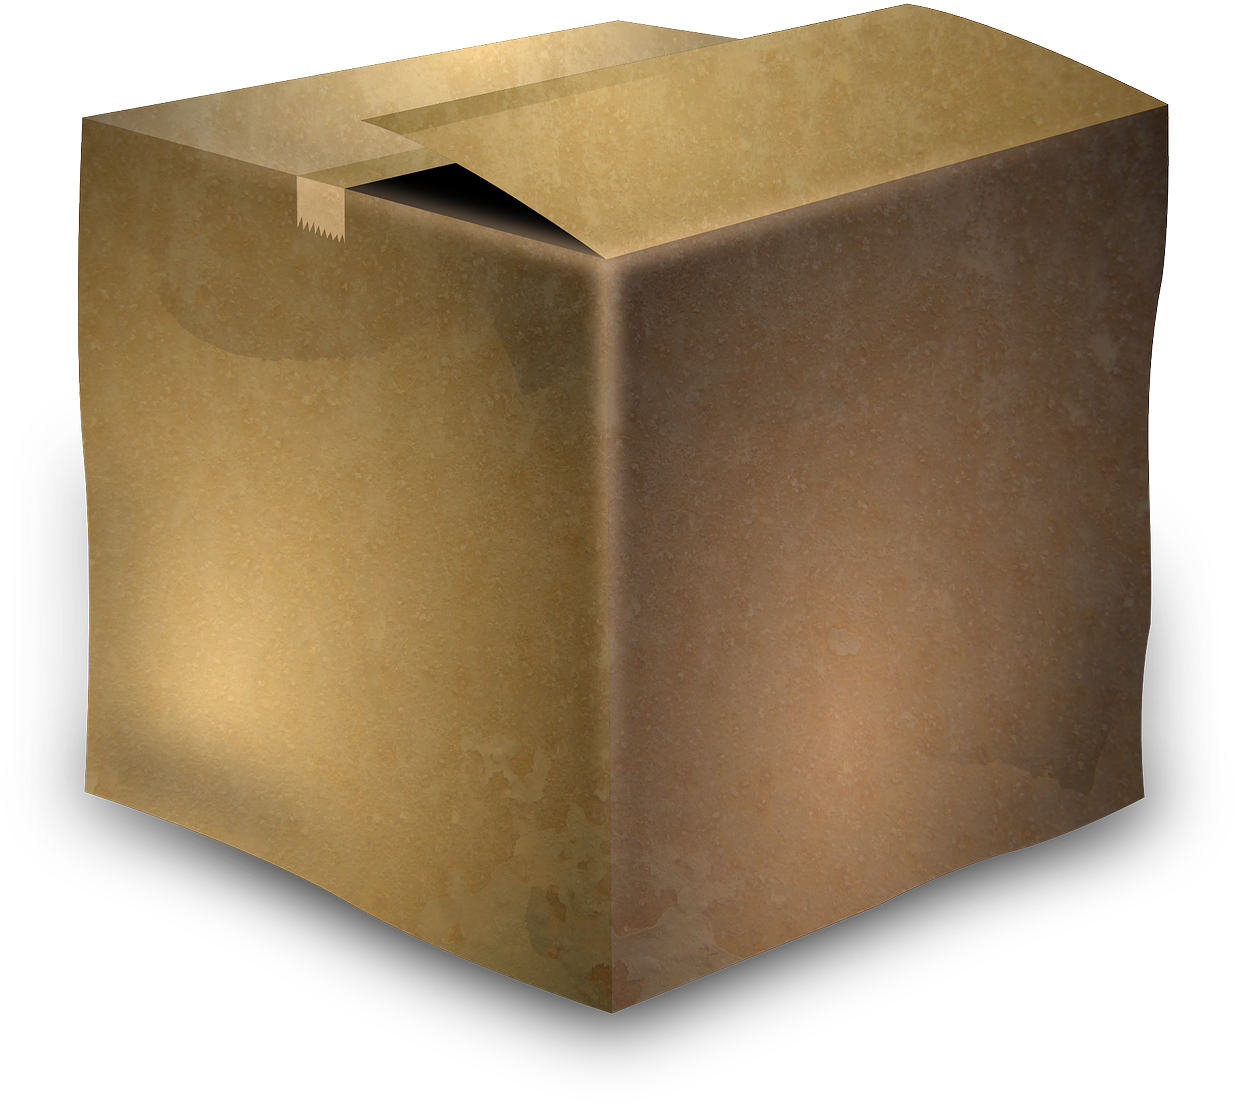 Cardboard Box Closed Top View PNG